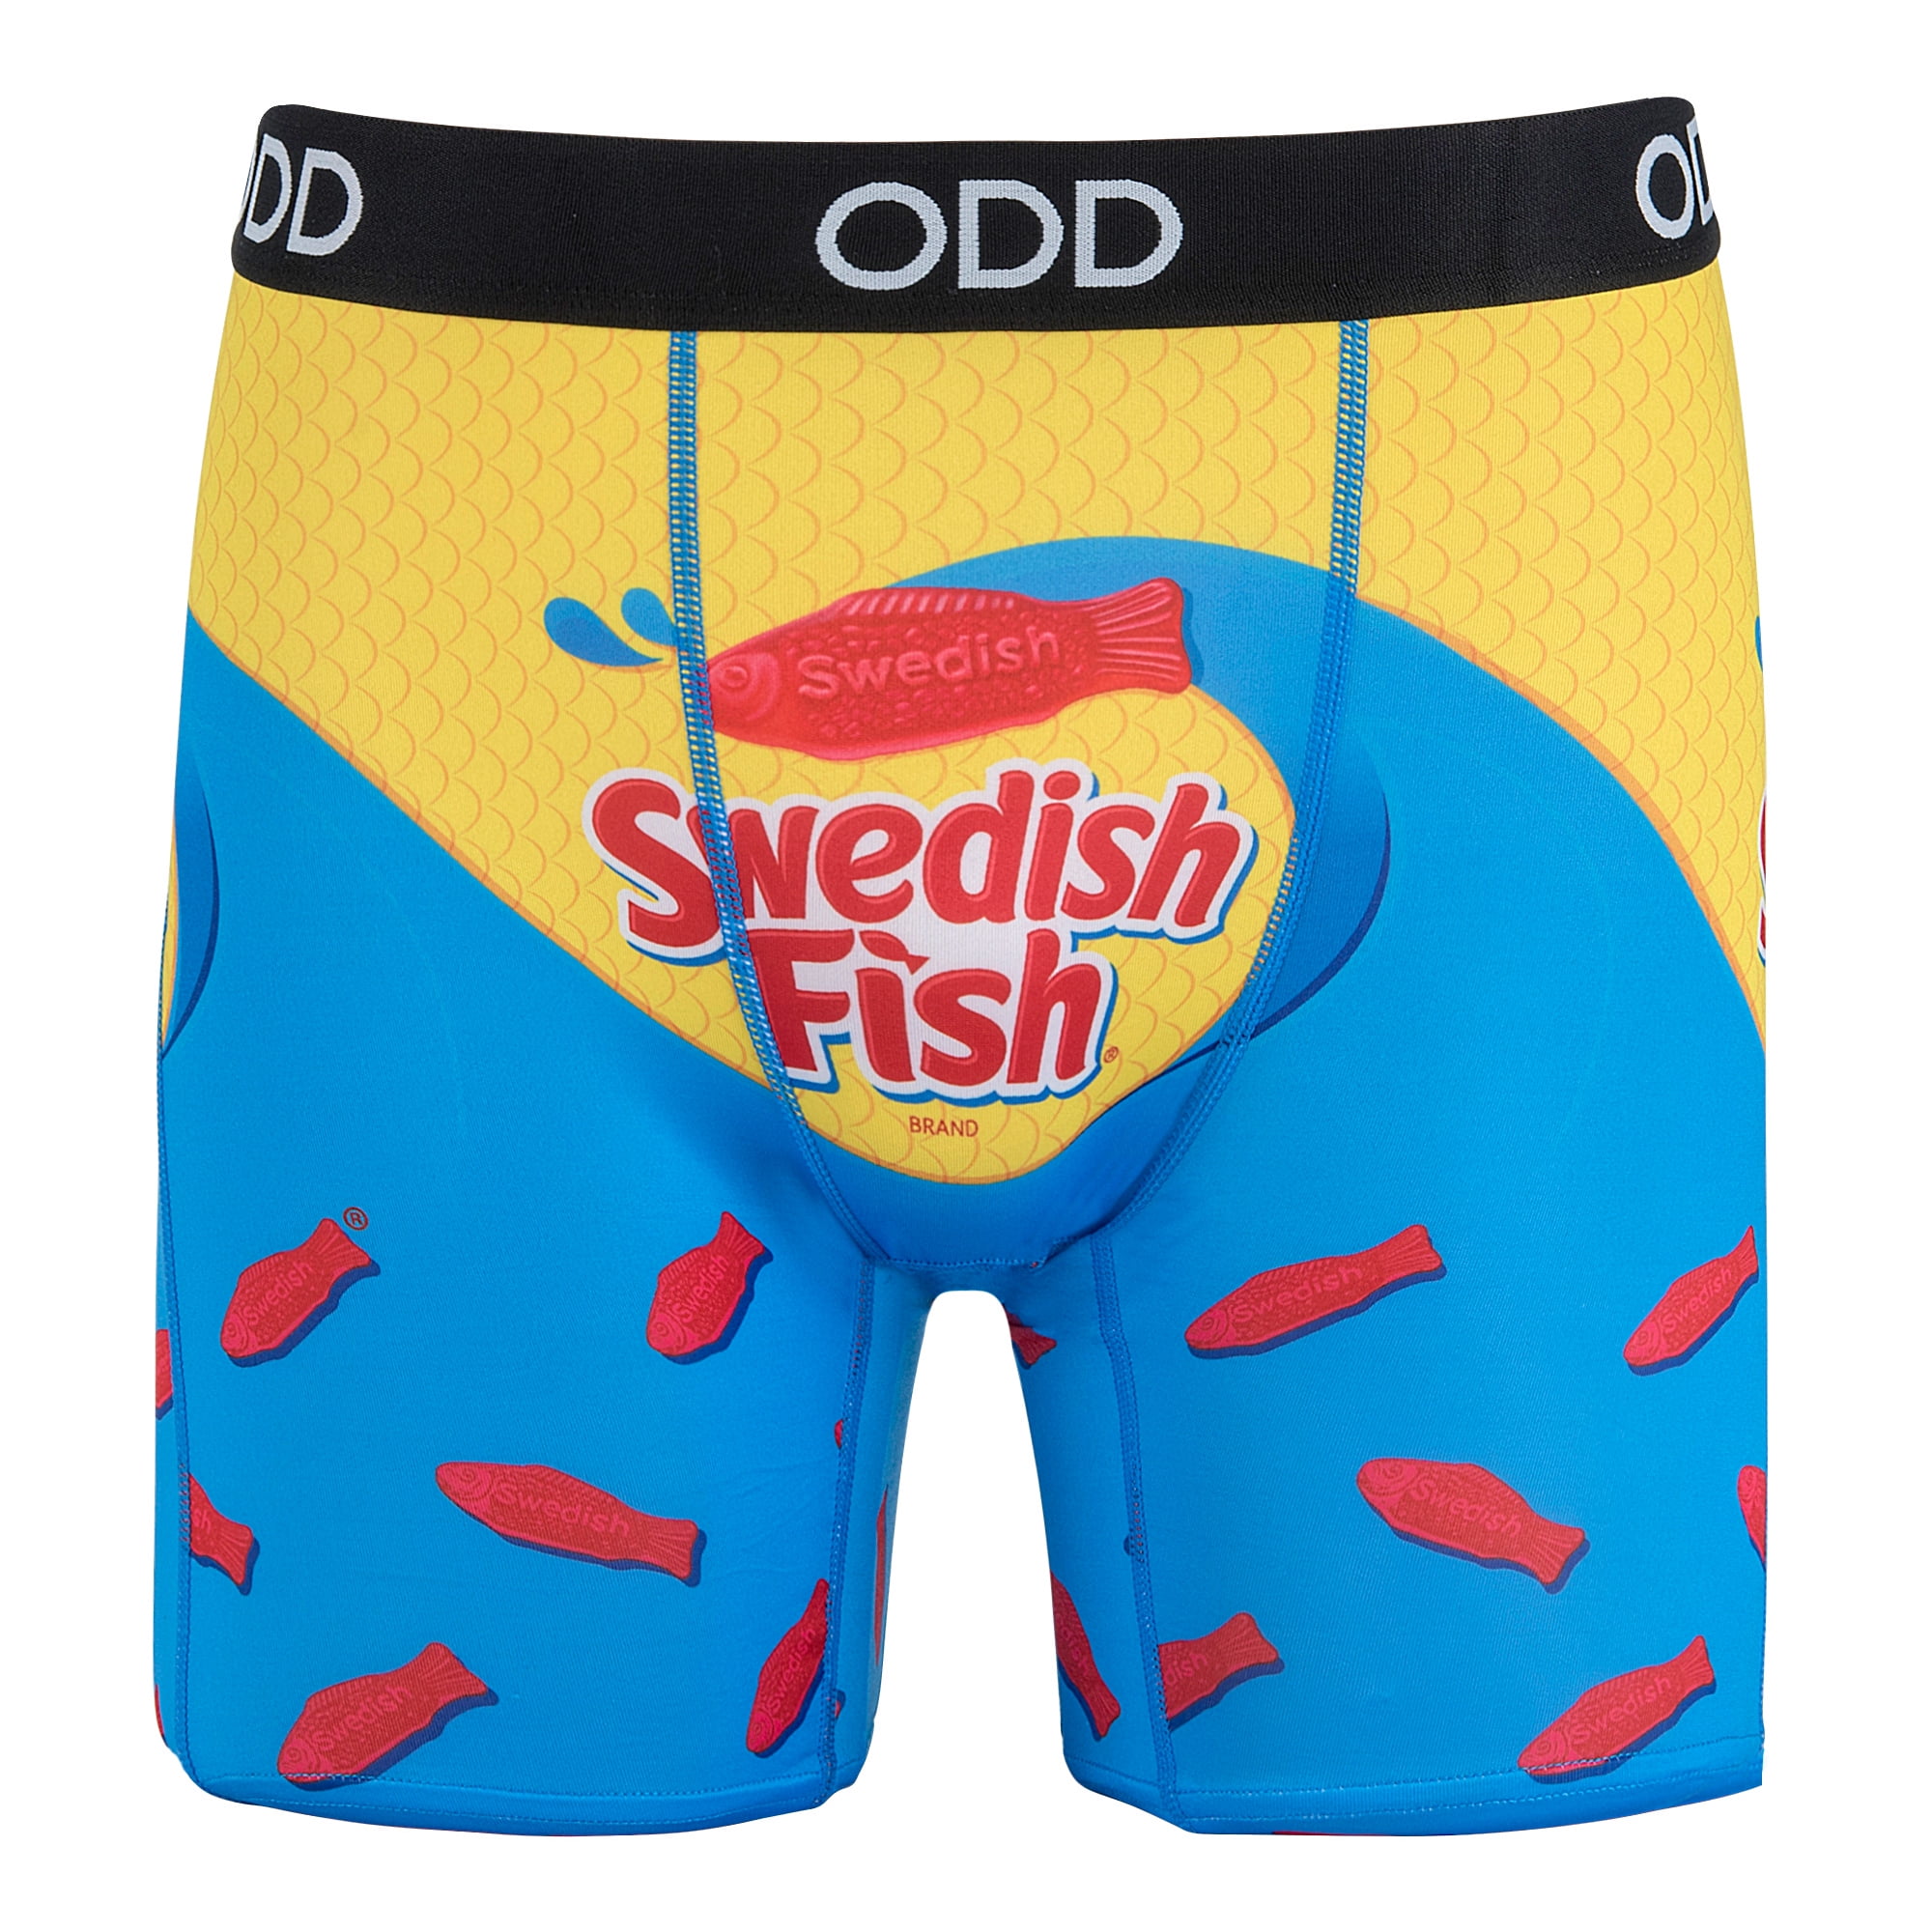 Odd Sox Men's Novelty Underwear Boxer Briefs, Swedish Fish, Funny Graphic  Prints - Medium